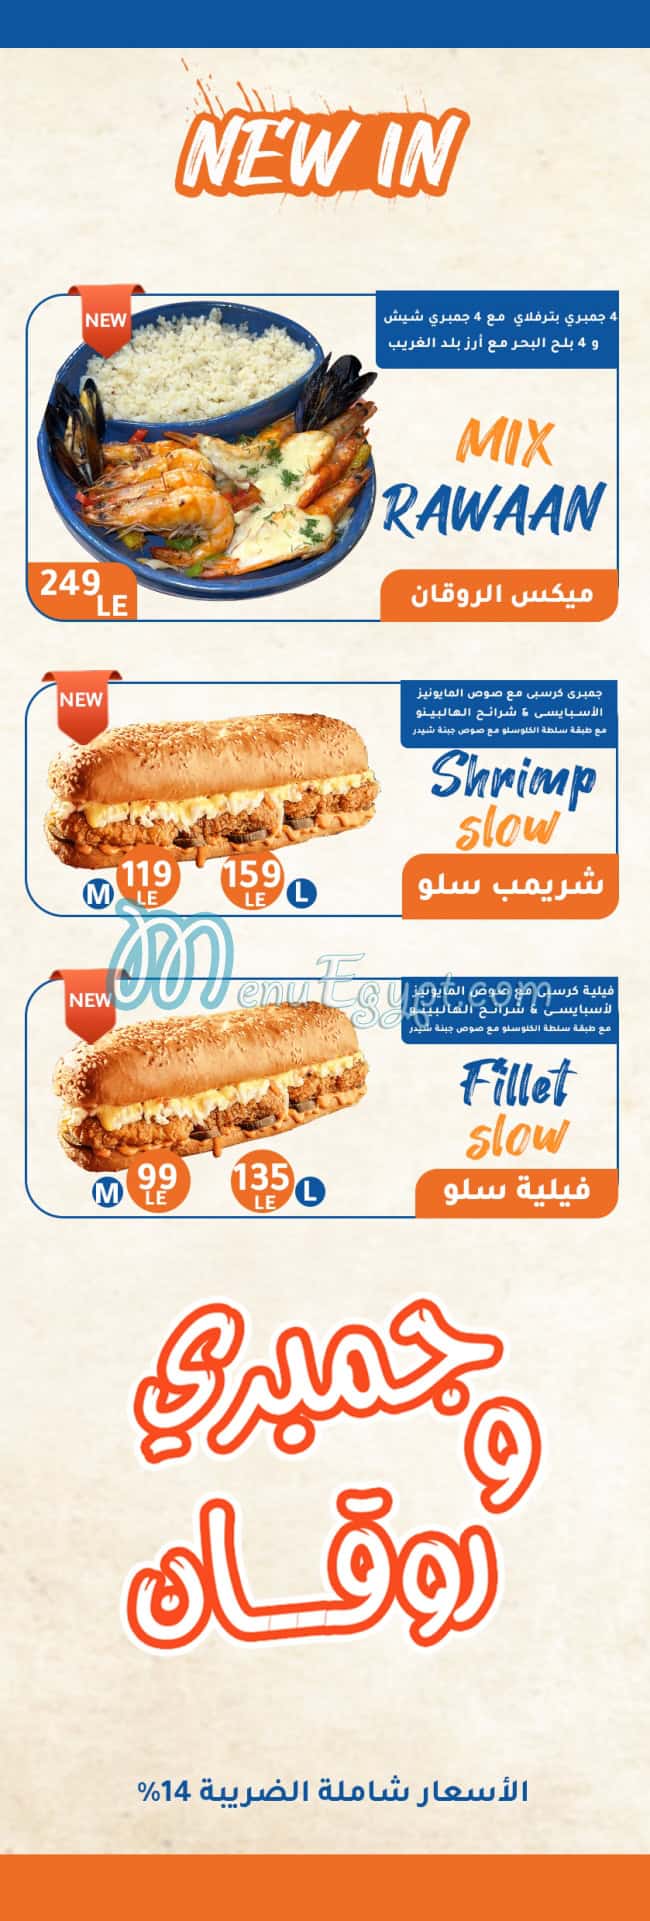 Balad El Gharieb menu